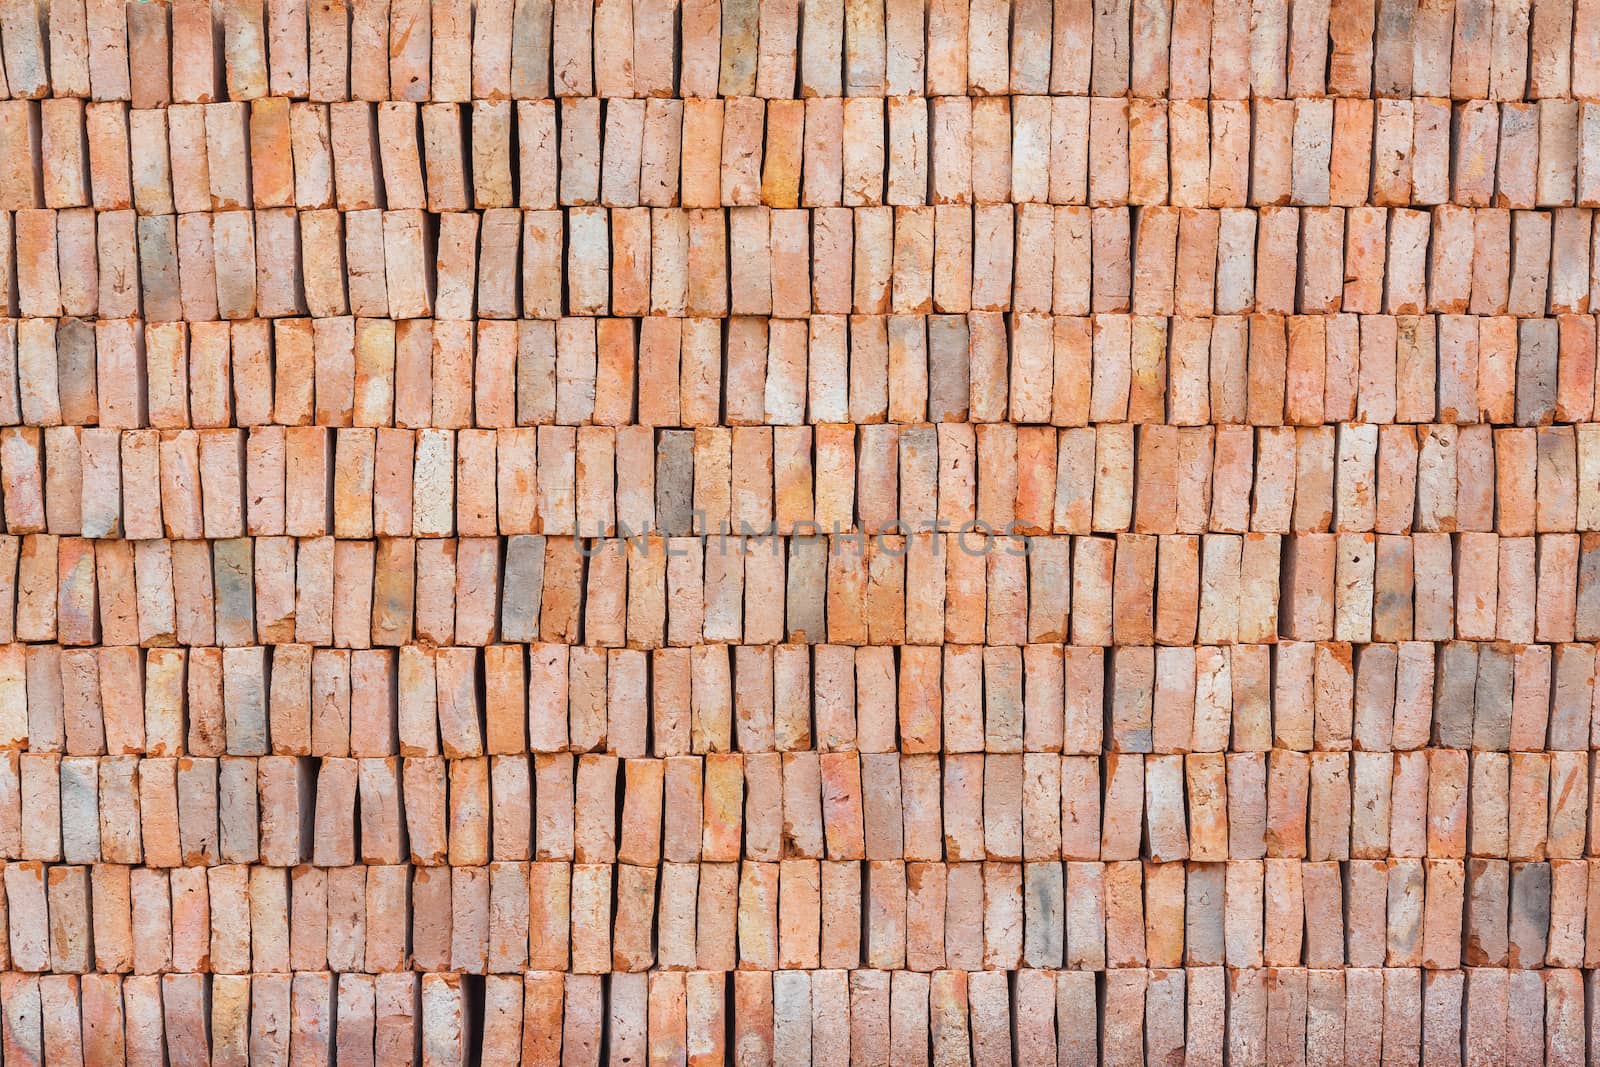 Stacks of Thai Red brick